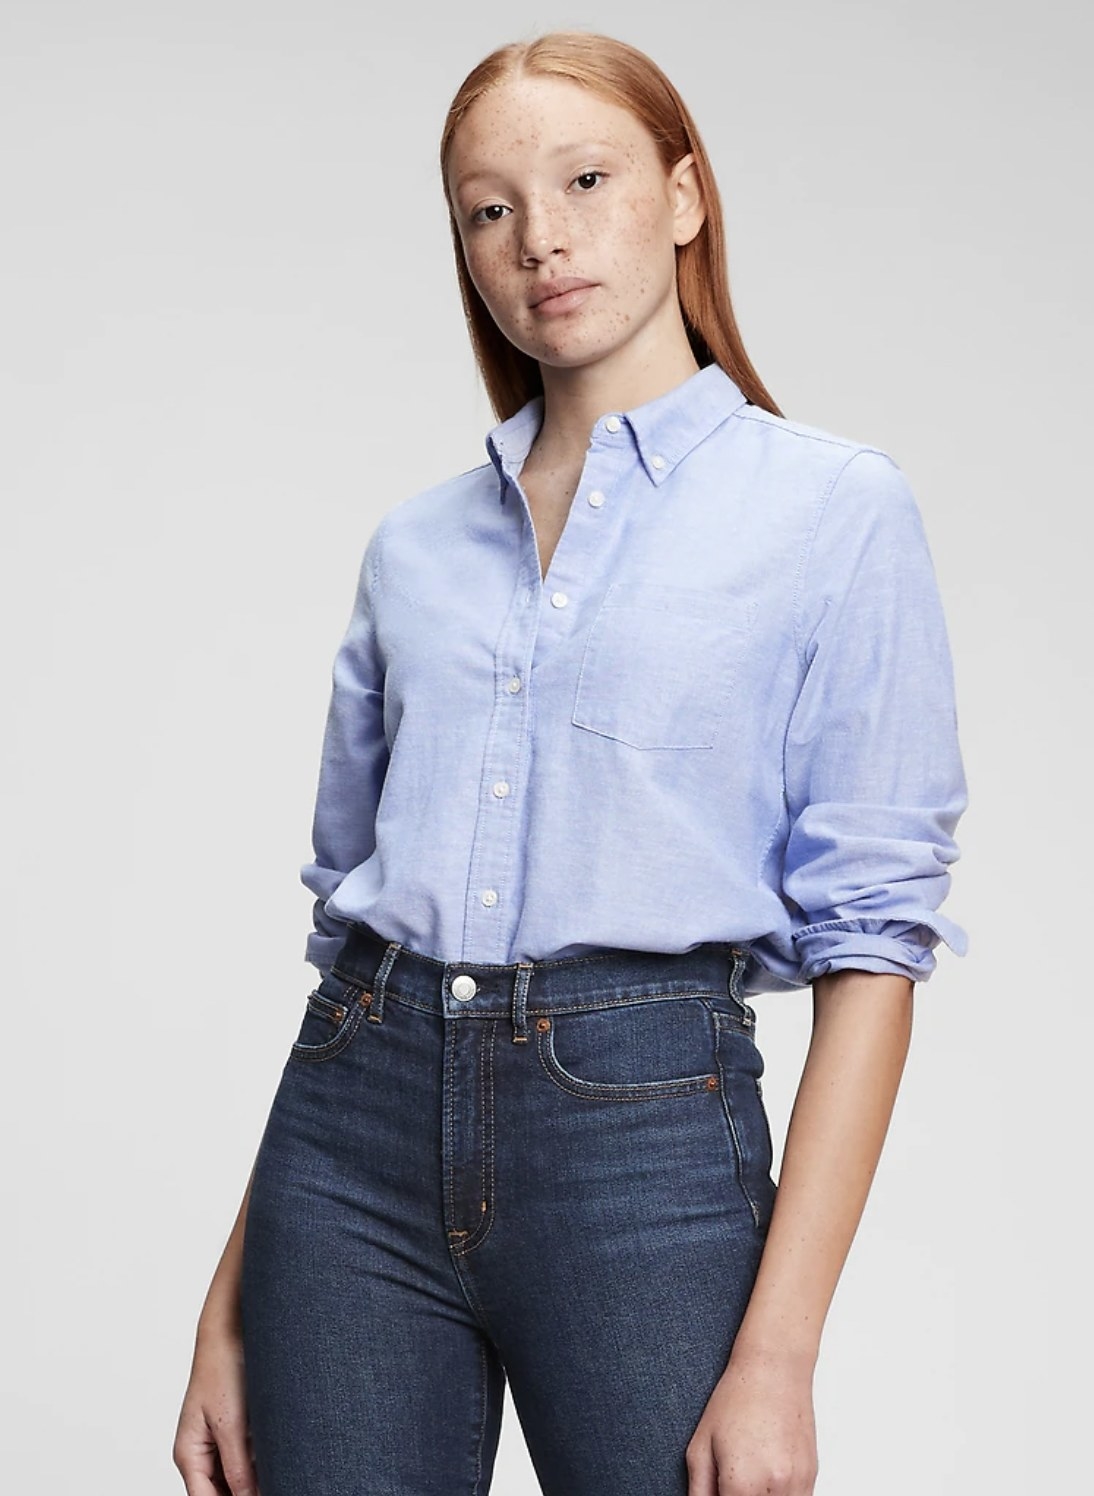 model wearing an oxford shirt in blue